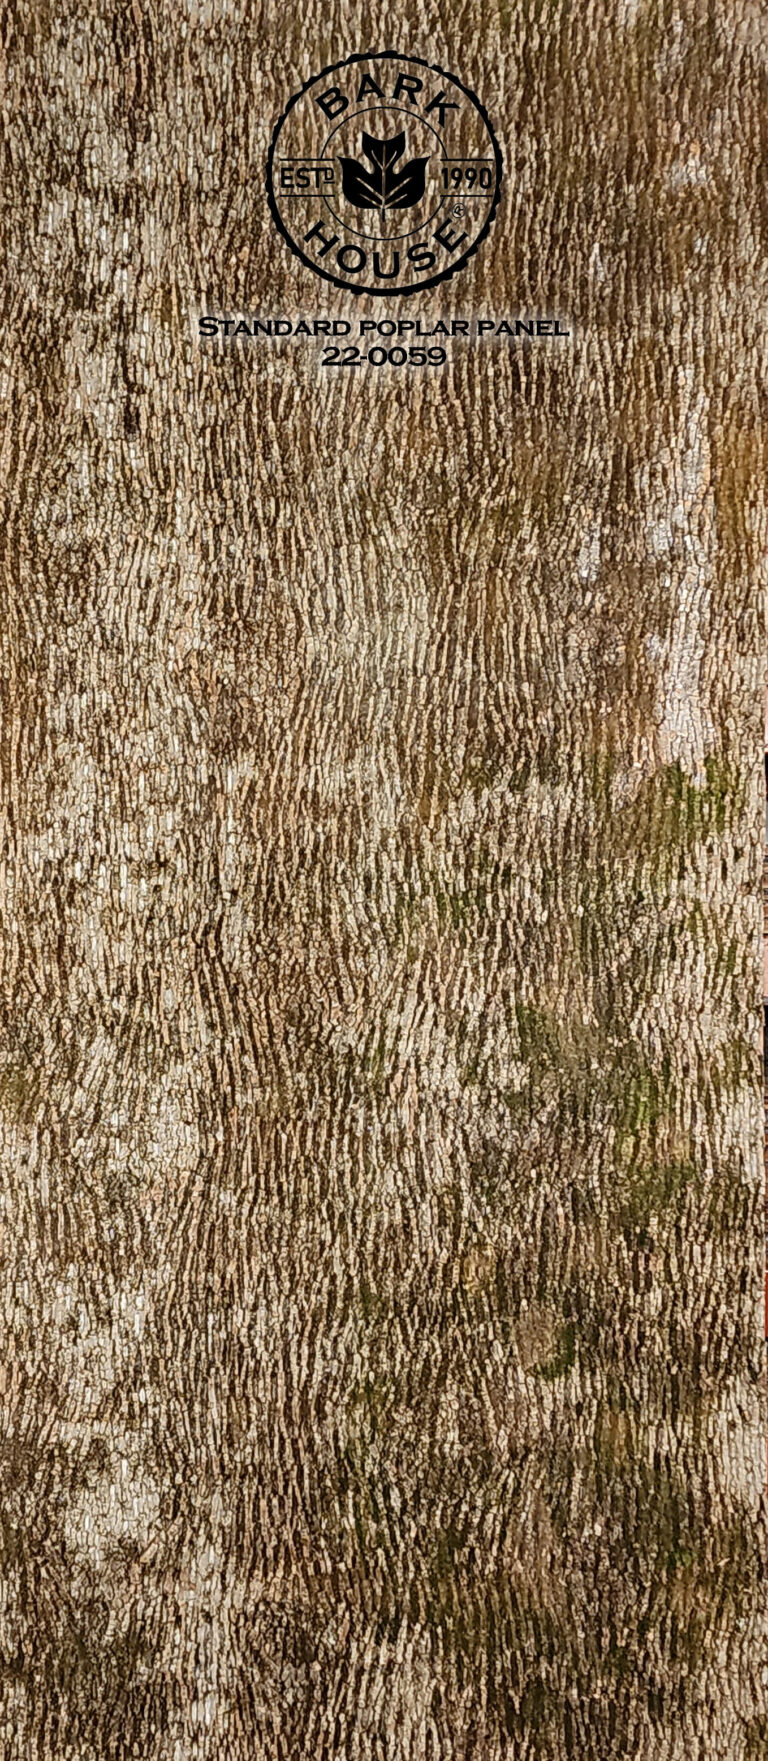 Bark House poplar bark panel SKU POPP-STD-22-0059